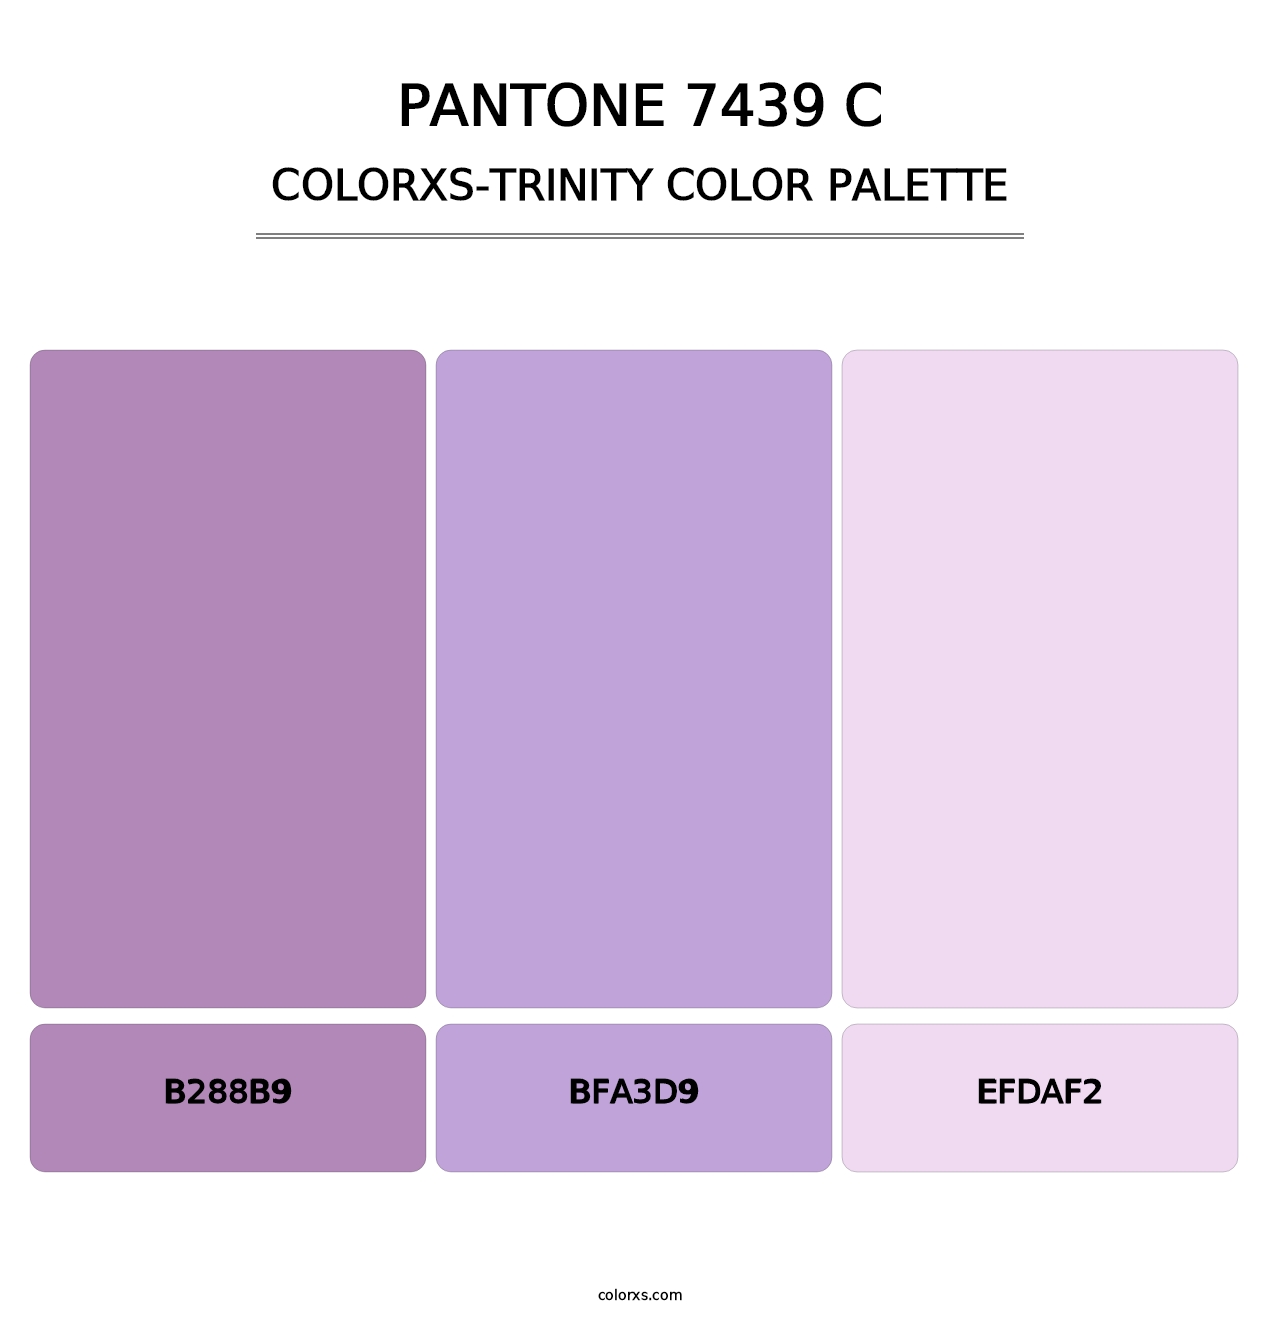 PANTONE 7439 C - Colorxs Trinity Palette